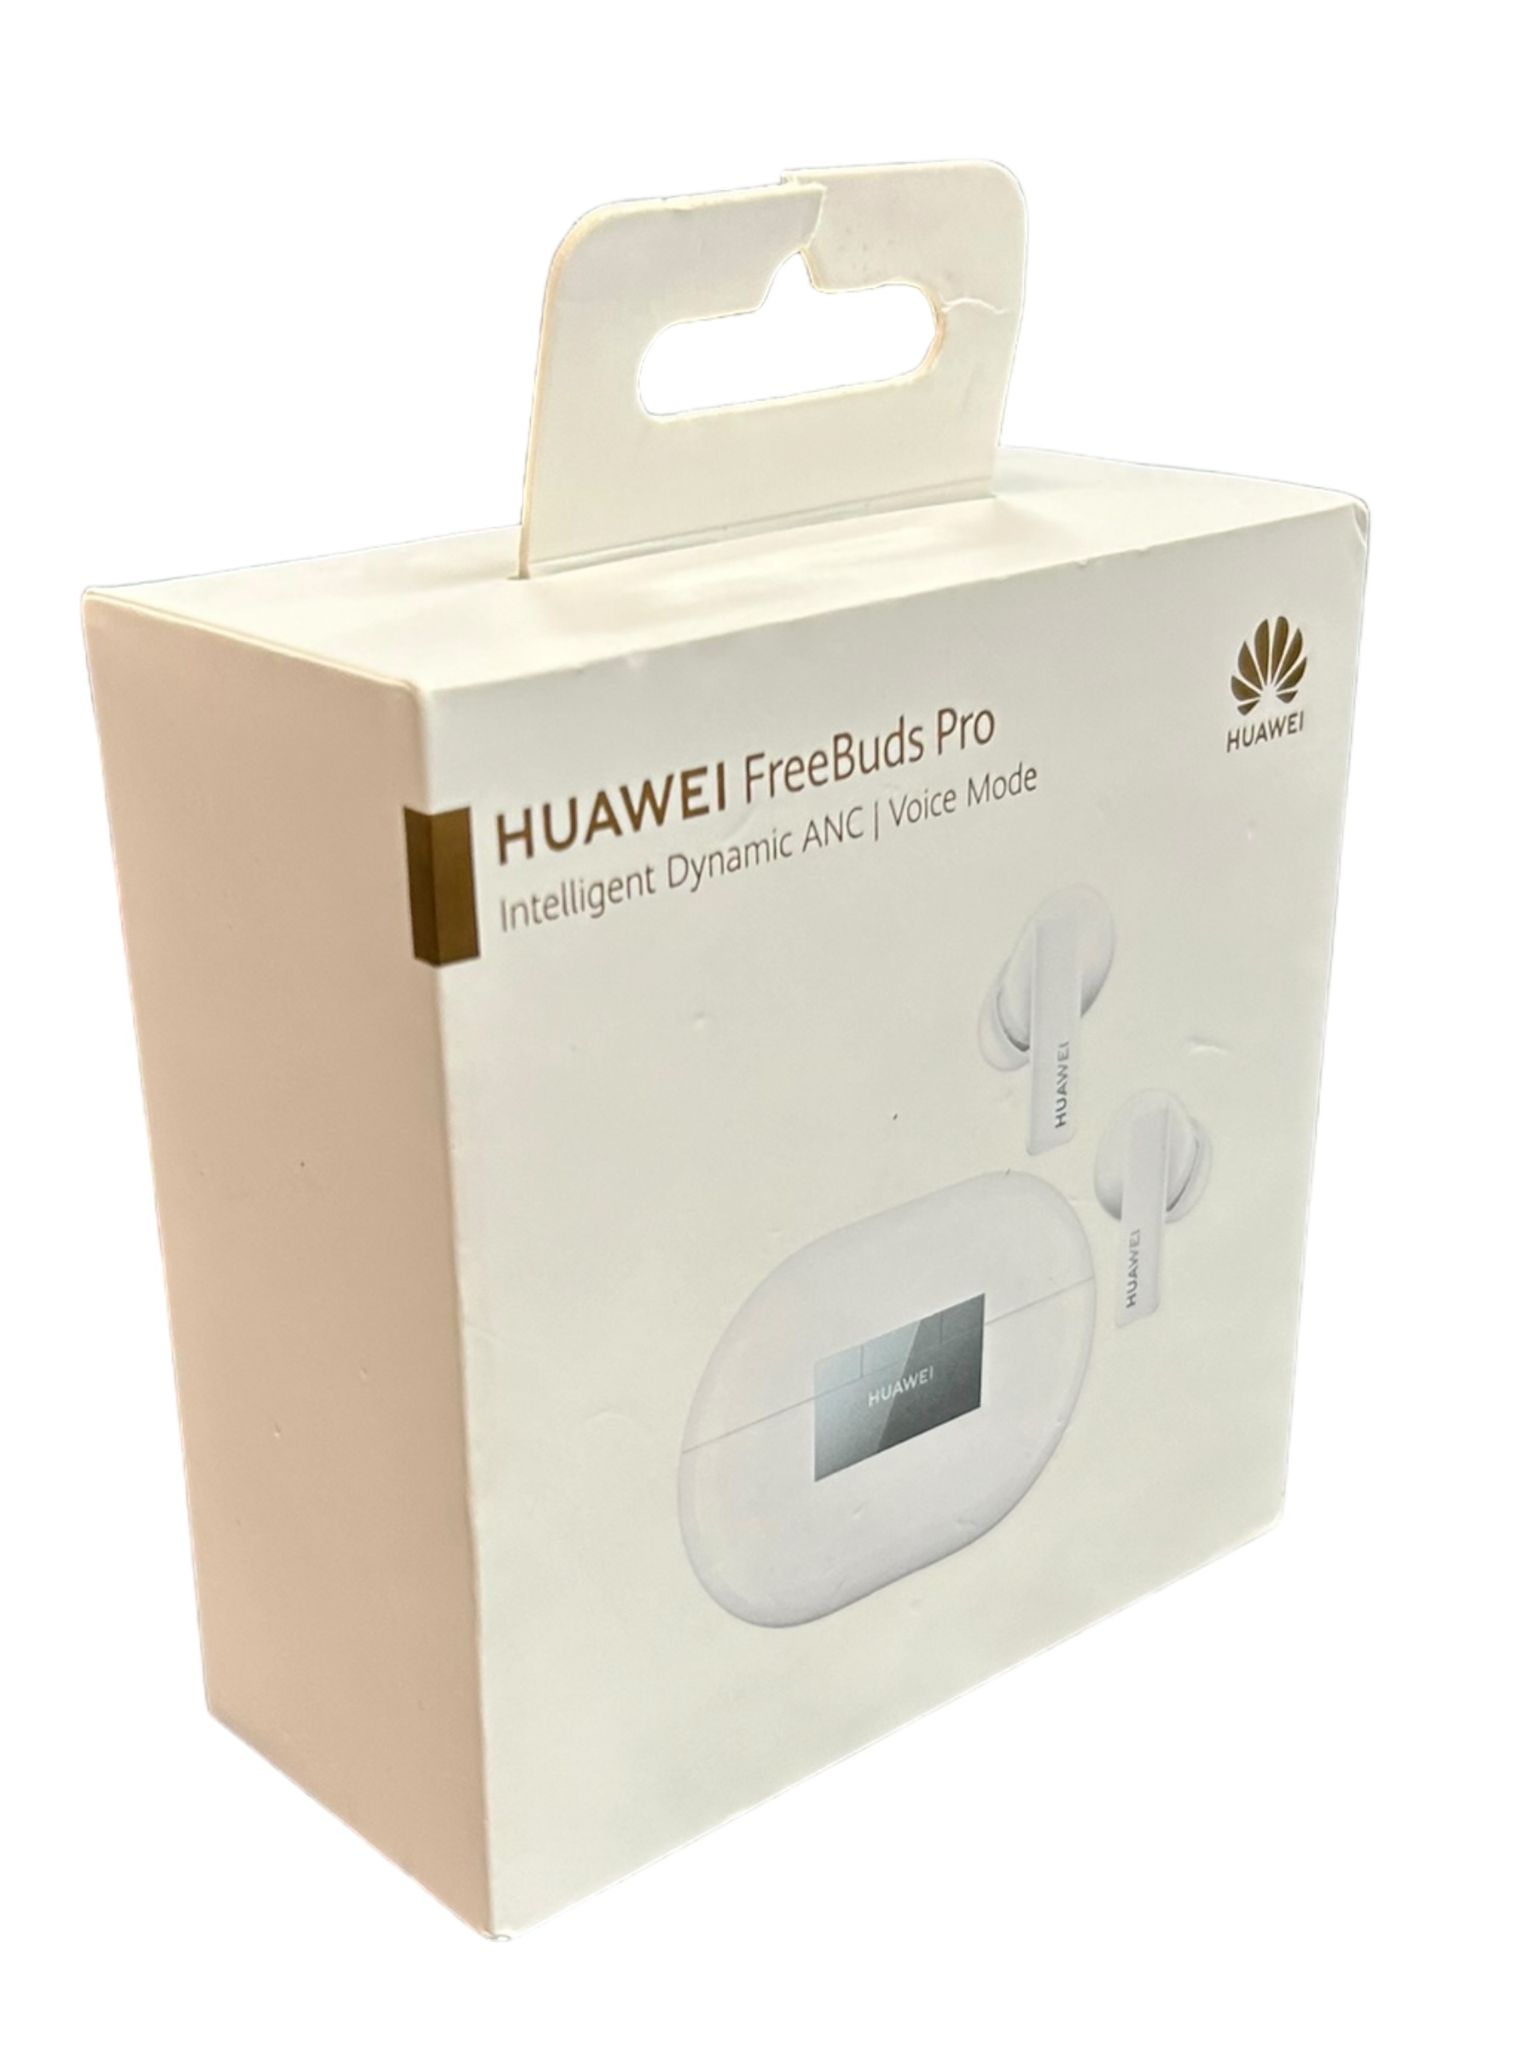 Huawei Freebuds Pro - Boxed